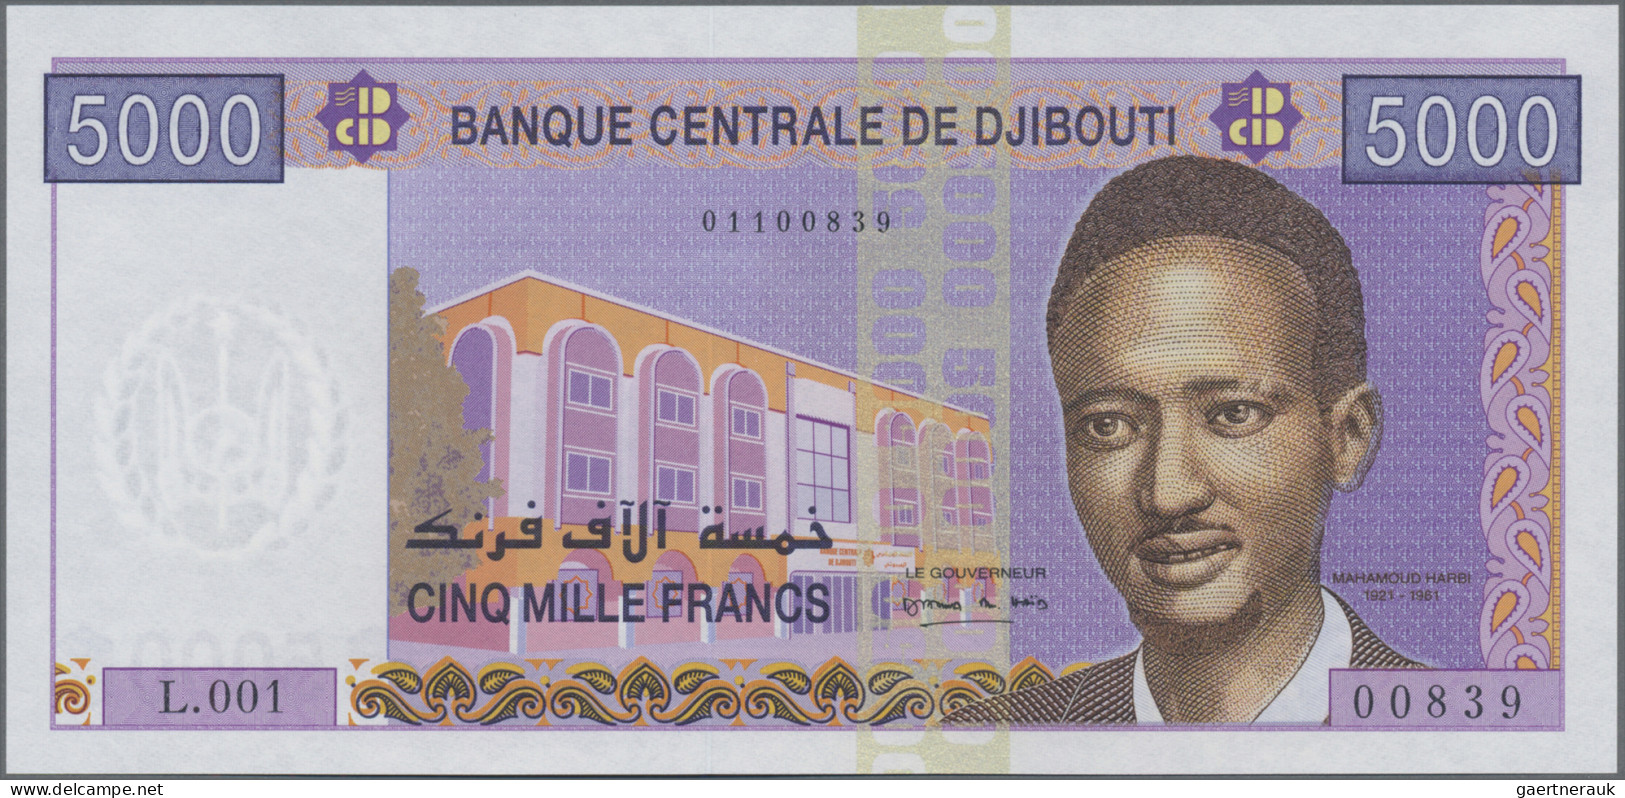 Djibouti: Banque Nationale - République de Djibouti and Banque Centrale de Djibo